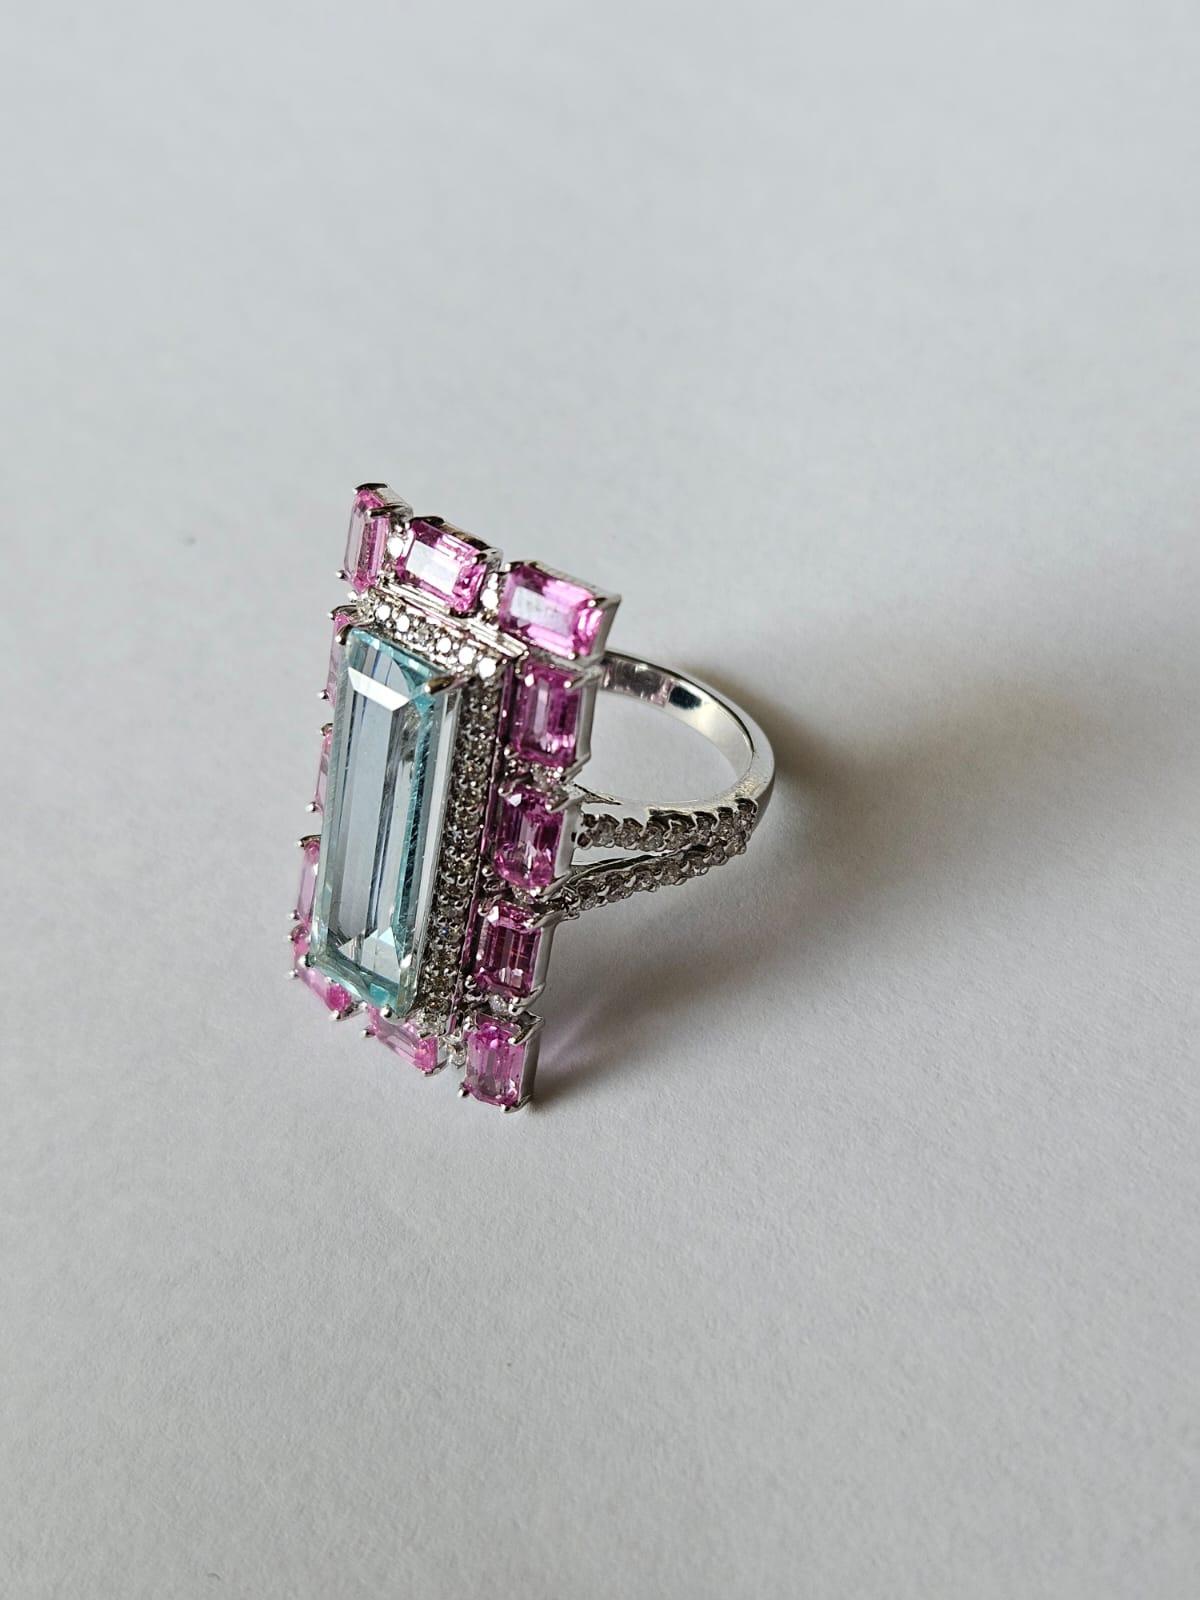 Emerald Cut Set in 18K Gold, 4.33 carats Aquamarine, Pink Sapphires & Diamonds Cocktail Ring